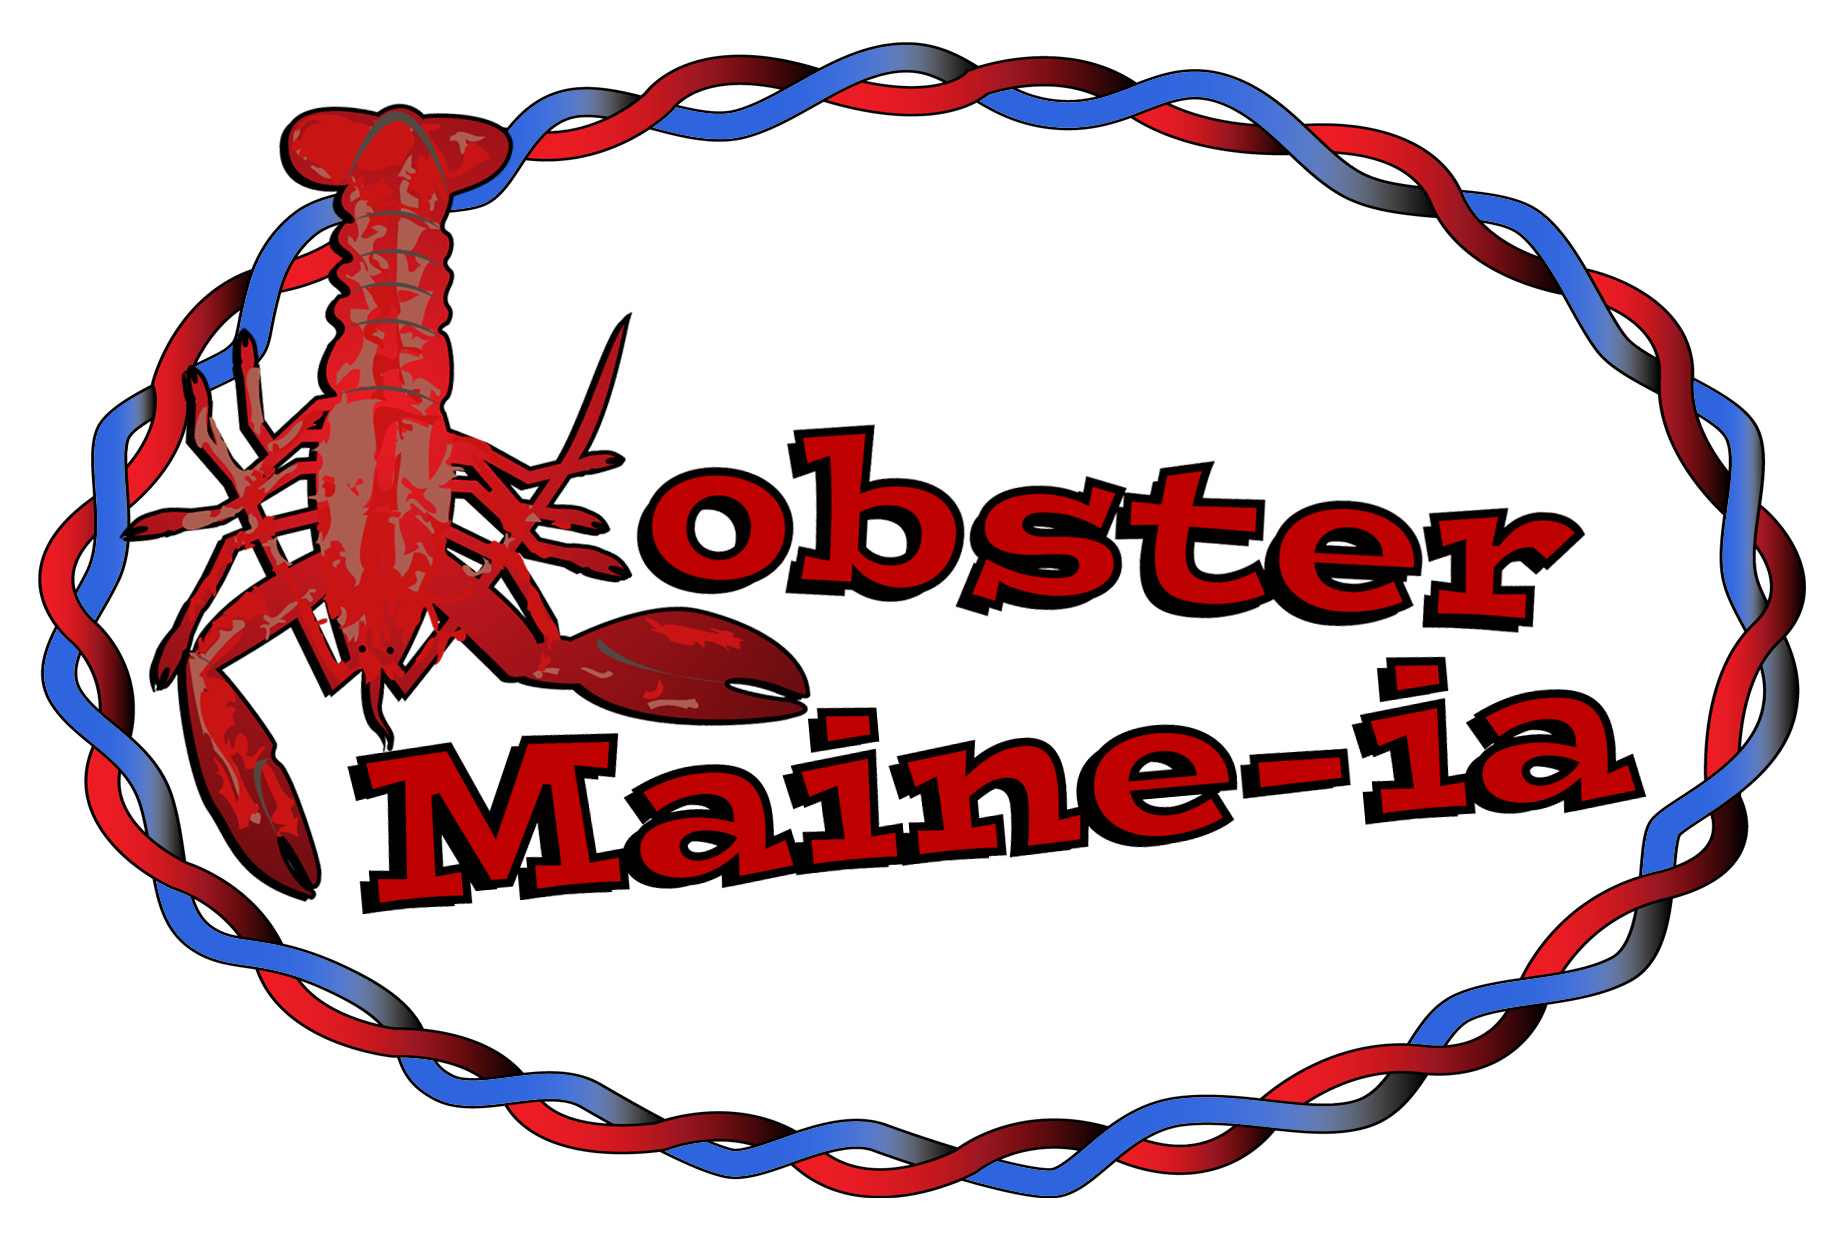 Lobster Maine Ia: